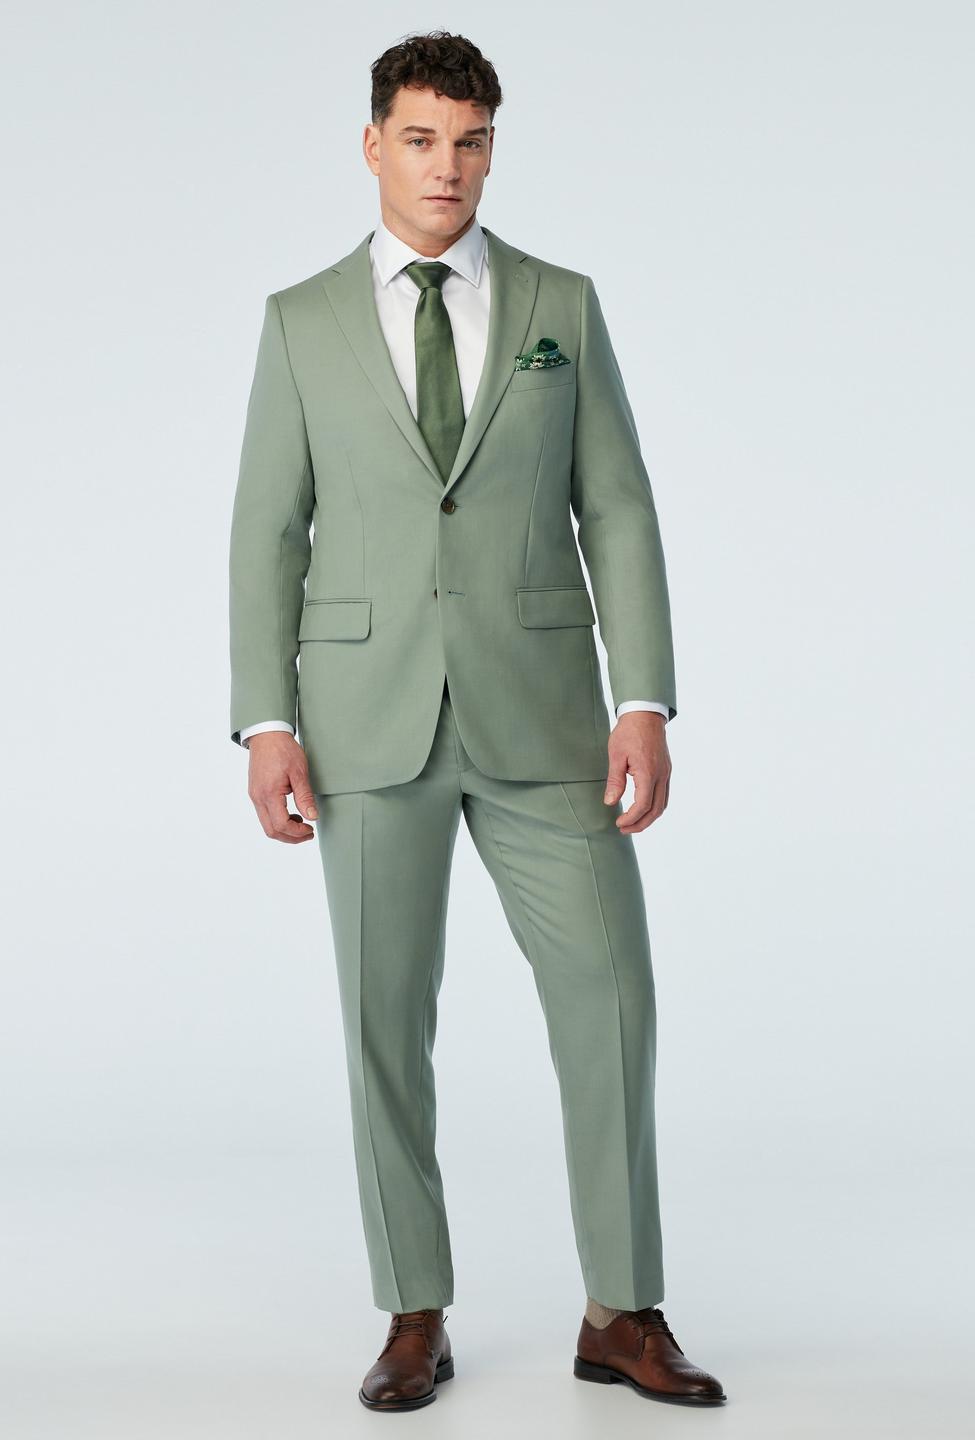 Harrogate Sage Suit